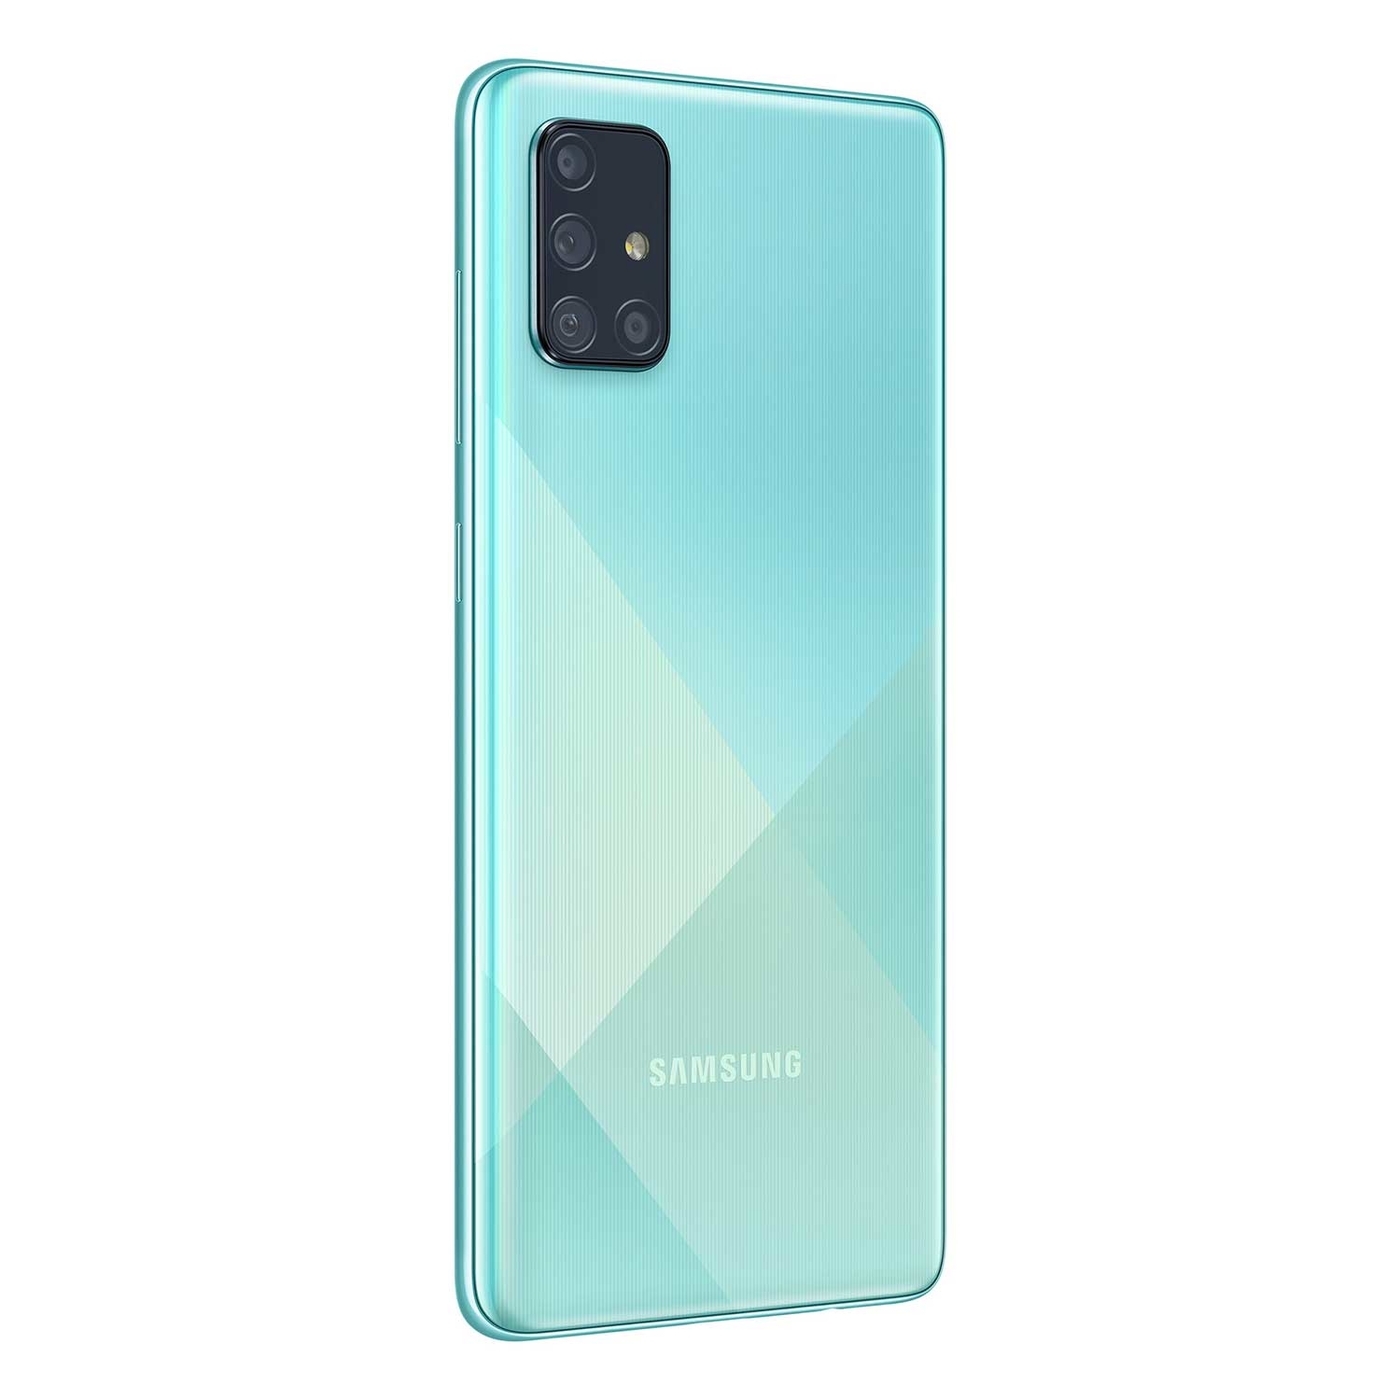 Celular SAMSUNG Galaxy A71 - 128GB Azul